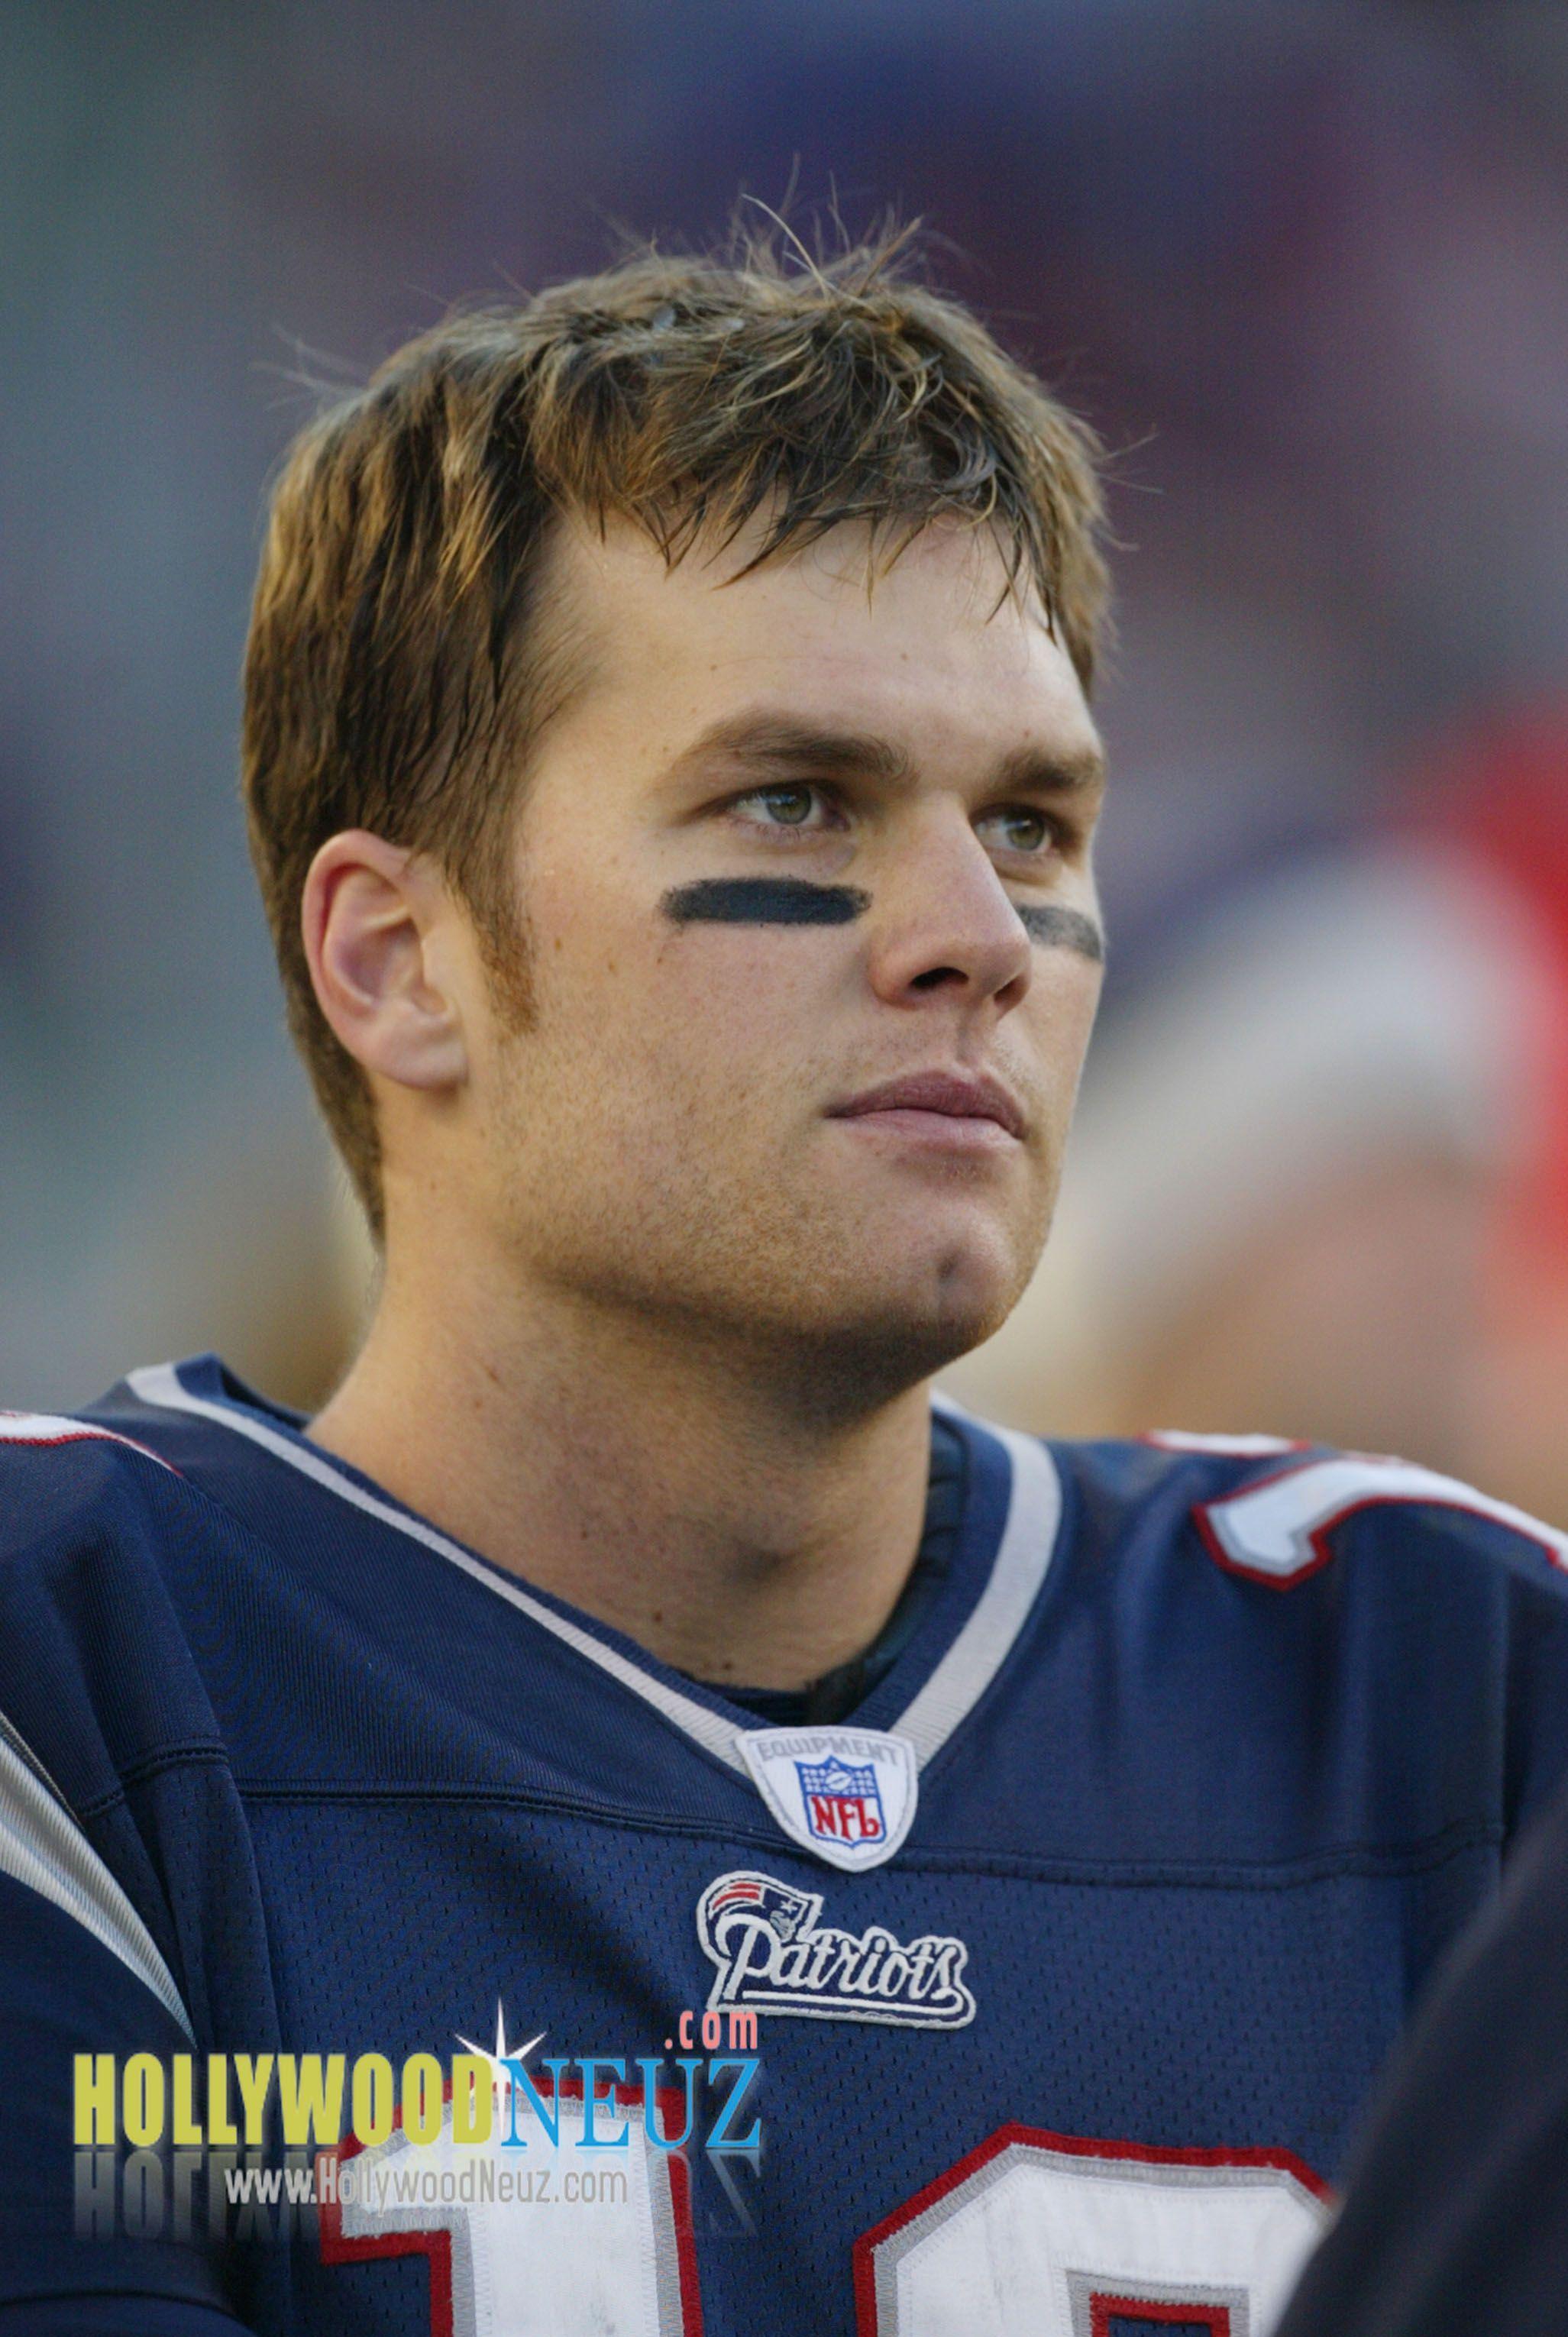 Tom Brady Profile. Biography. Picture. News